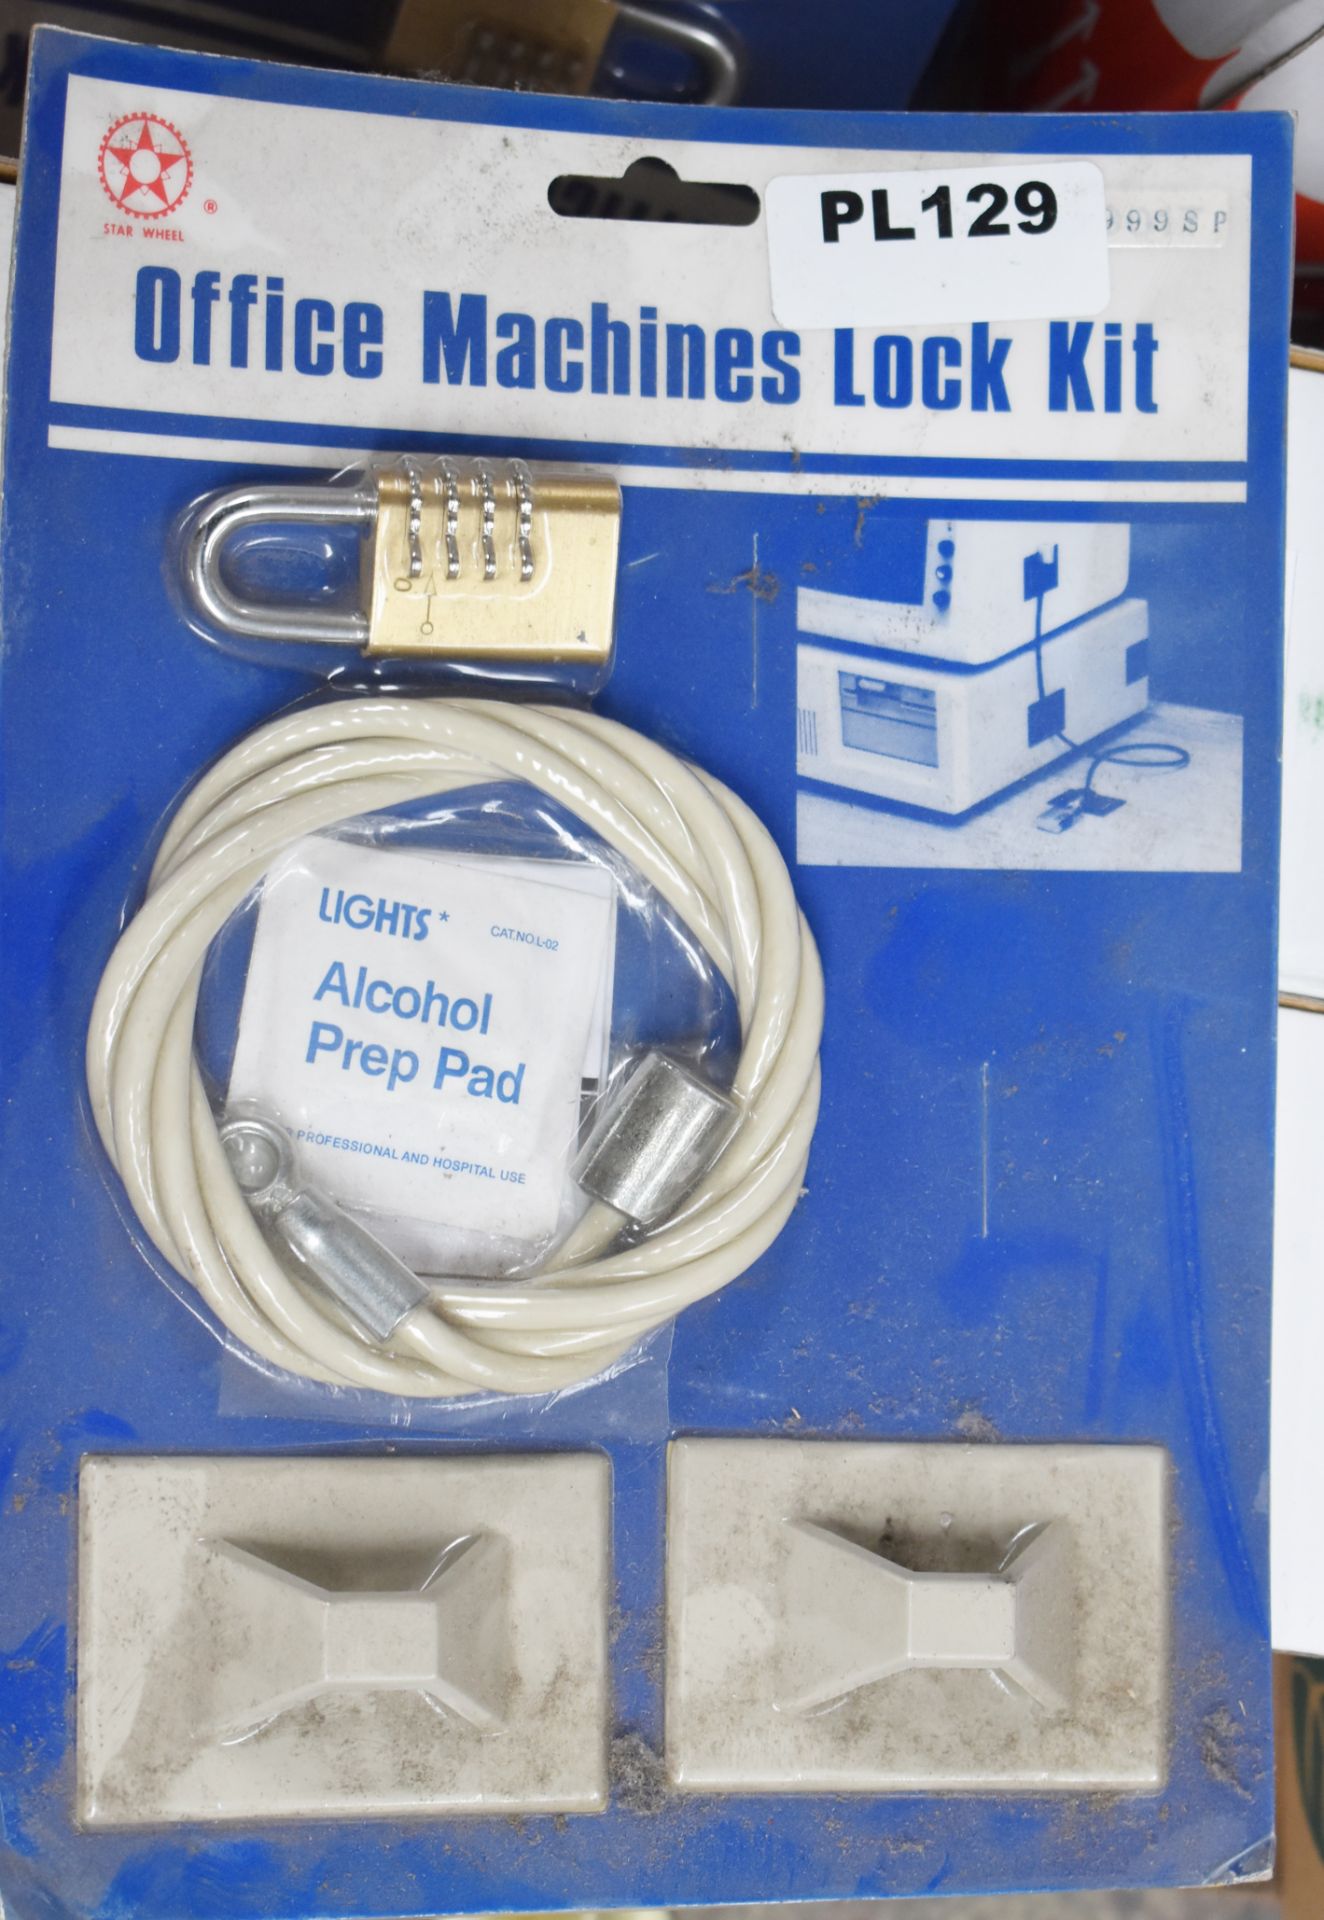 7 x Star Wheel Office Machine Lock Kits - Brand New Stock - RRP £280 - CL538 - Ref: Pallet in2-